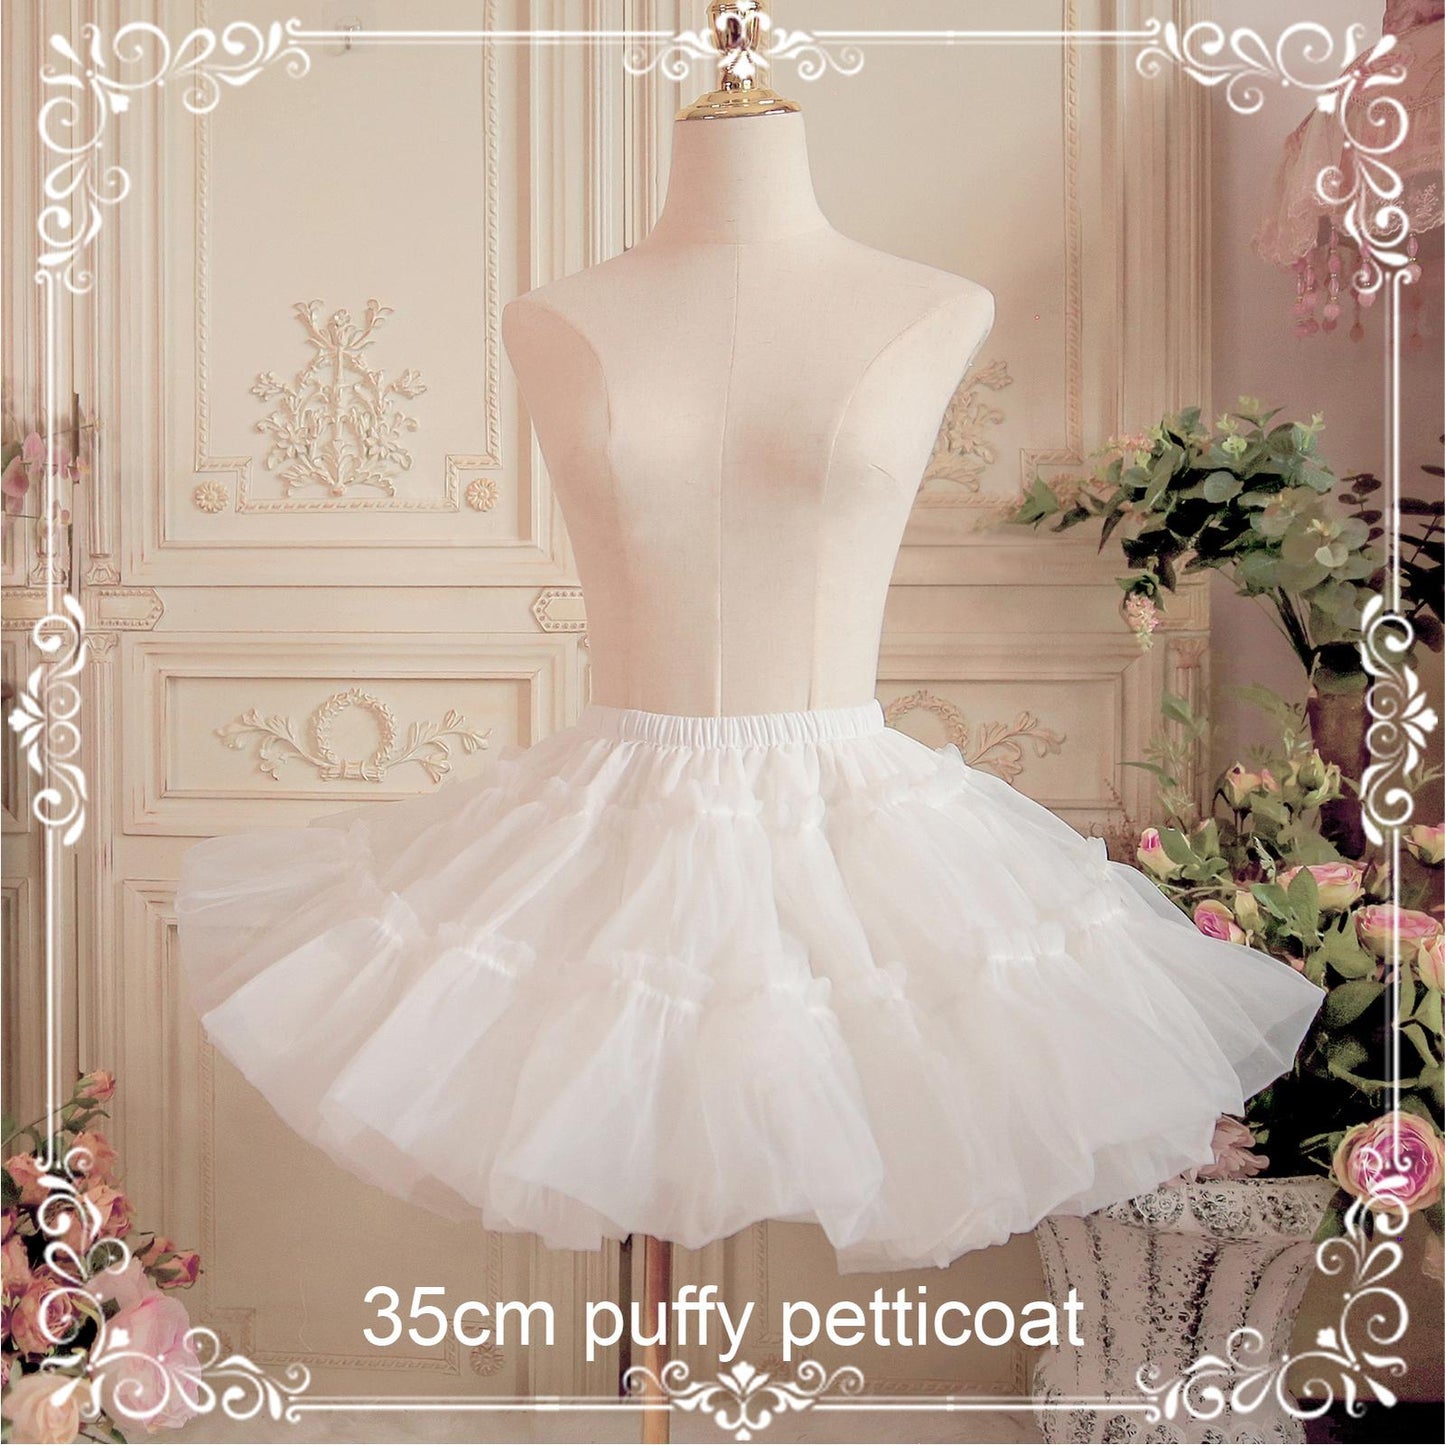 Aurora & Ariel 35cm Puffy Lolita Petticoat Customizable (white) 33014:456446